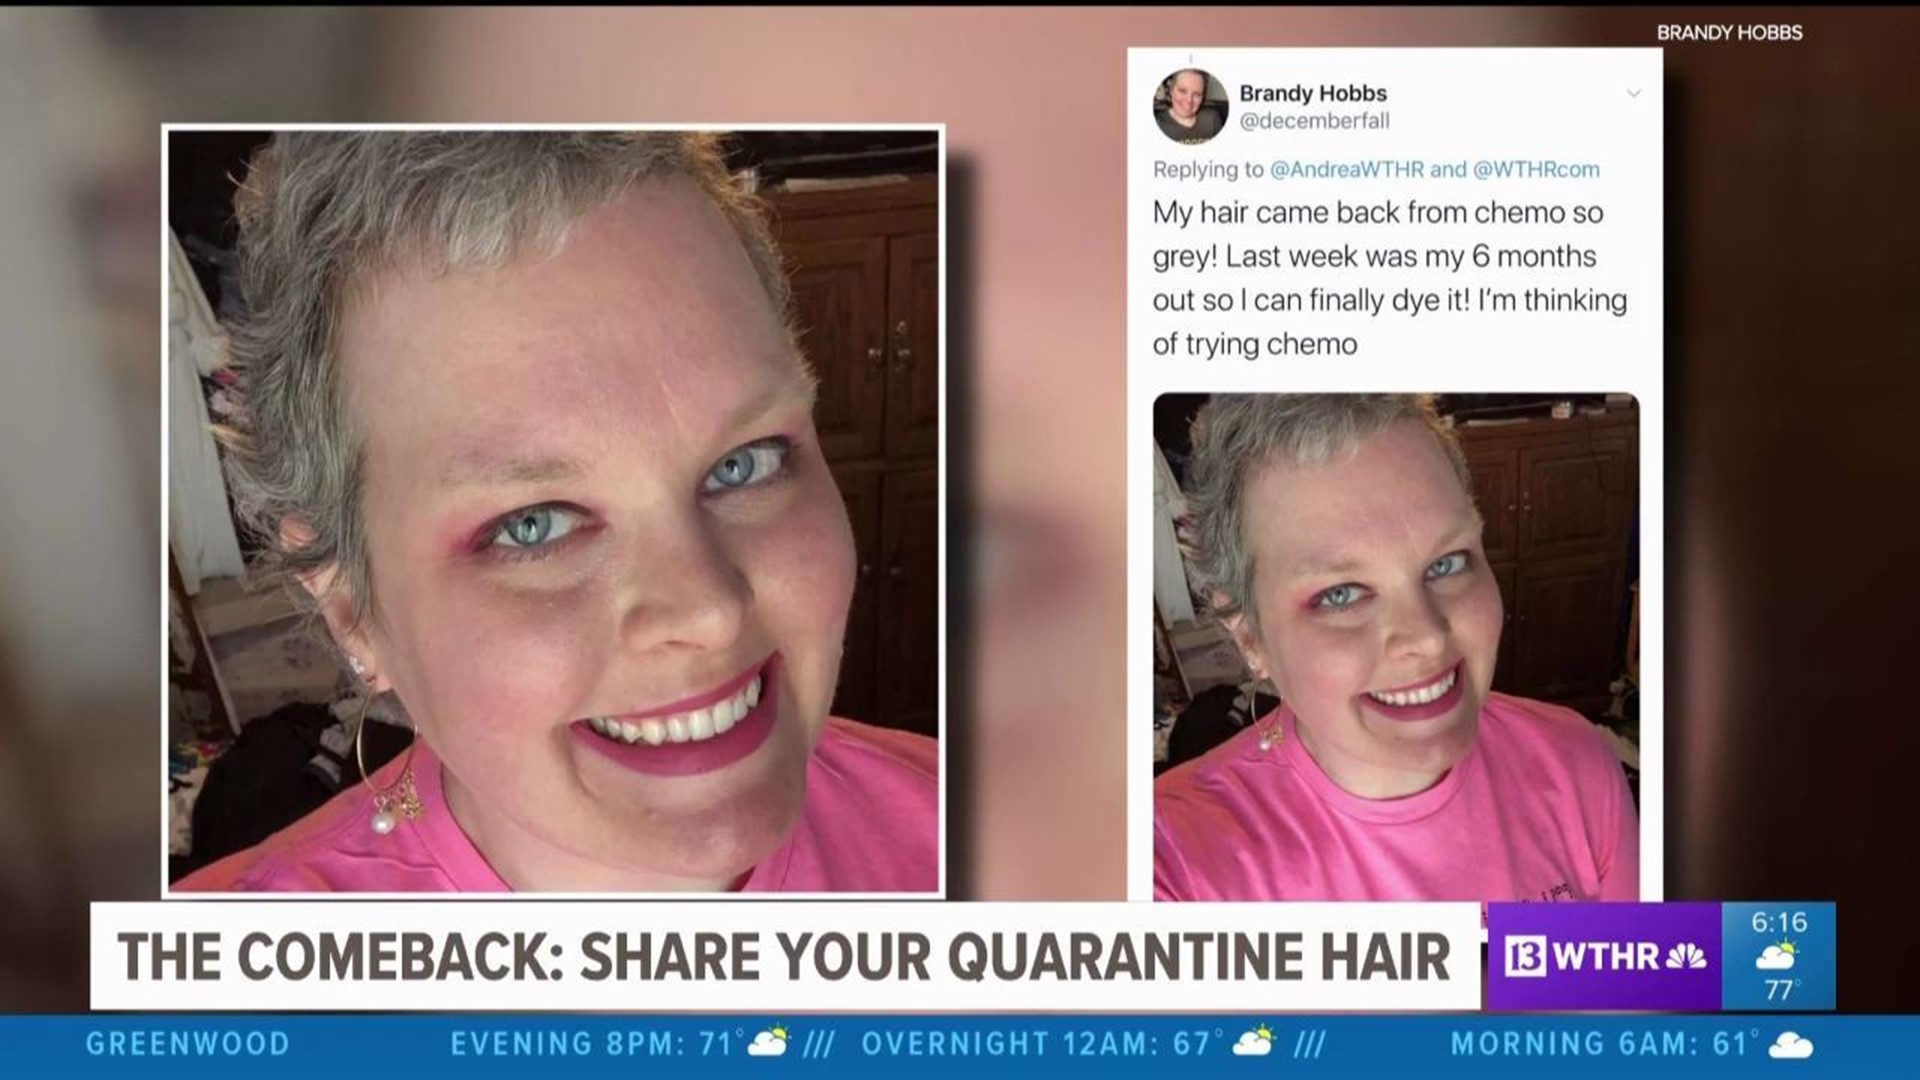 The Comeback: Share your quarantine hair